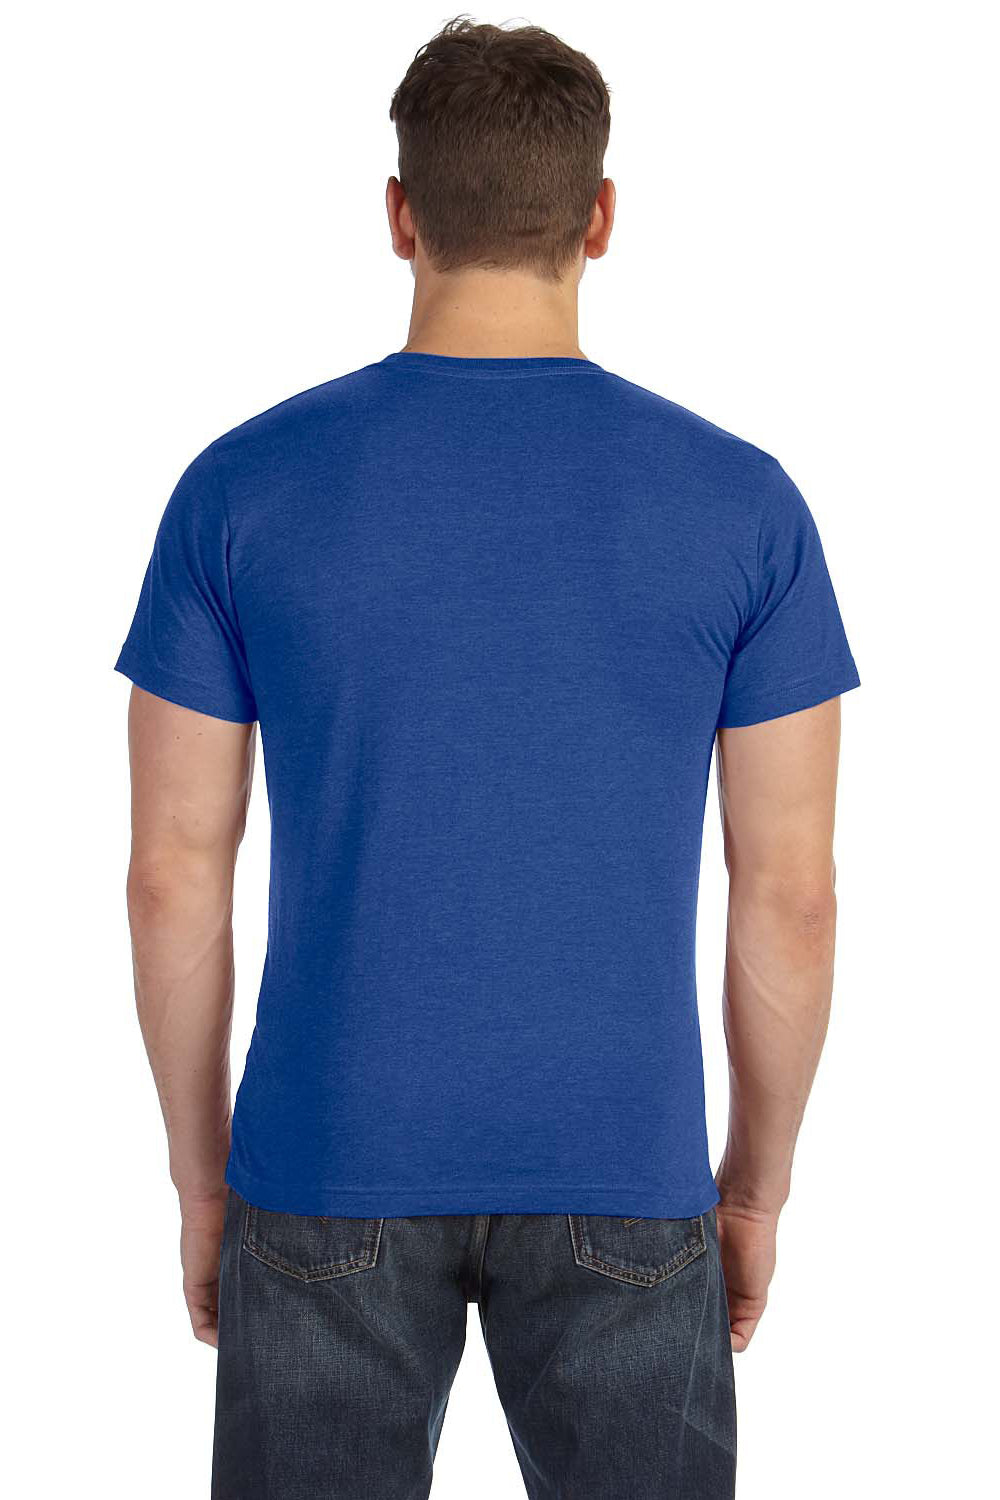 LAT 6905 Mens Fine Jersey Short Sleeve Crewneck T-Shirt Royal Blue Back